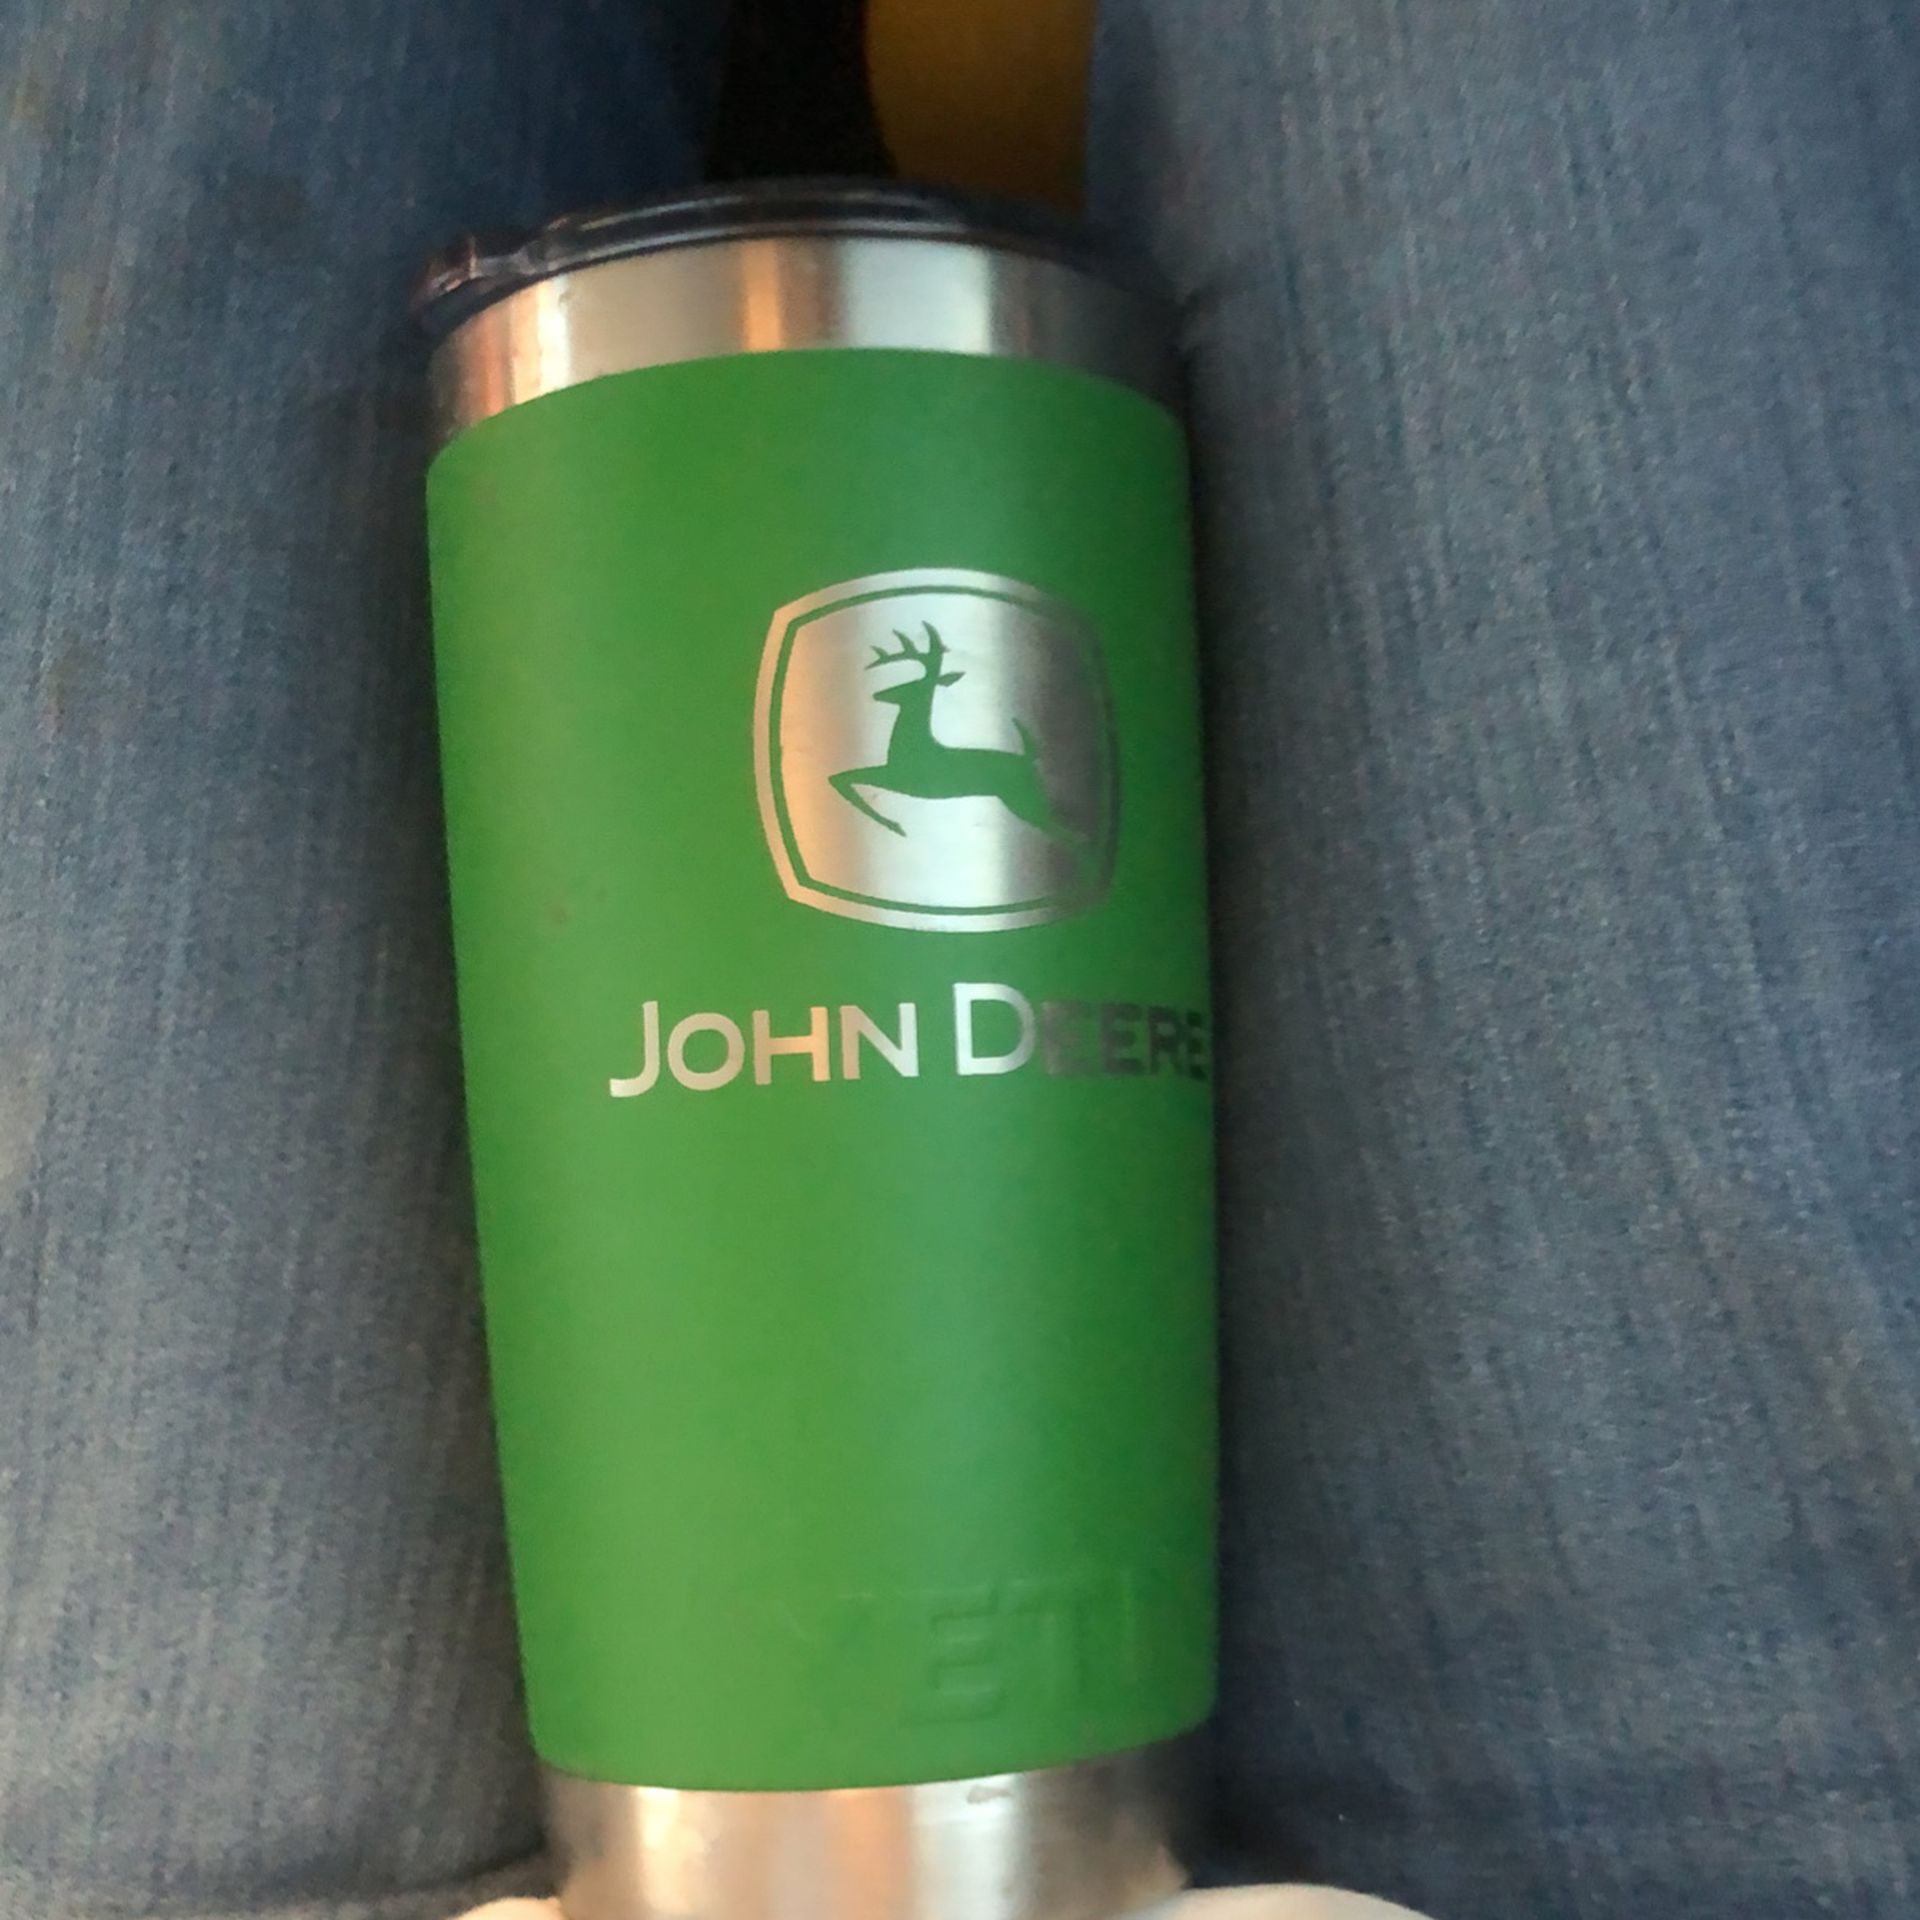 John DeereLimited Edition Yeti Cup for Sale in Visalia, CA - OfferUp